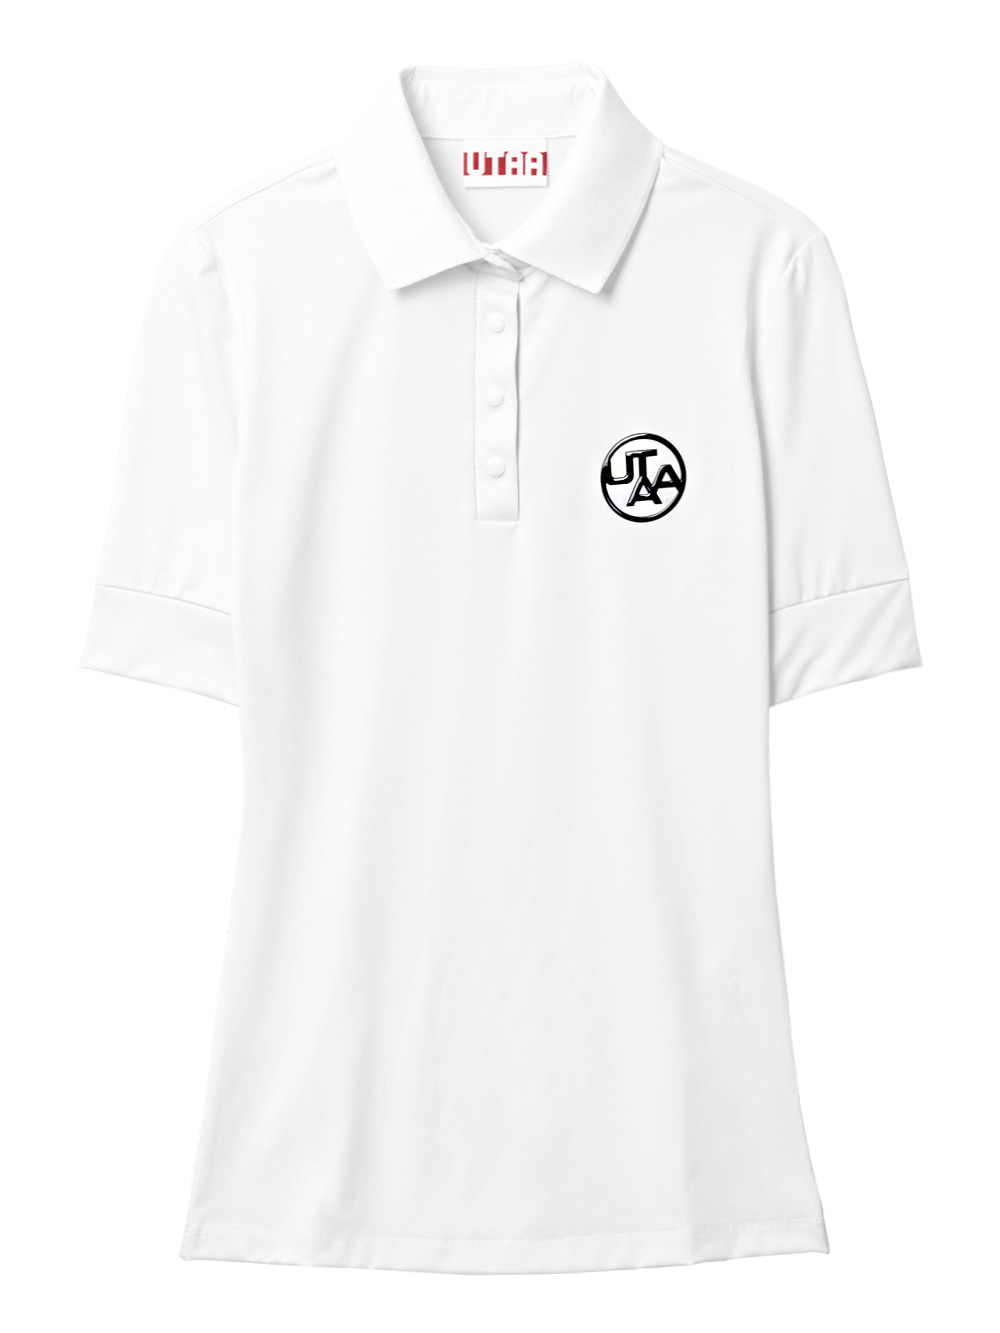 UTAA Swing Fit Emblem Polo T-Shirts : Women&#039;s (UA2TSF233WH)